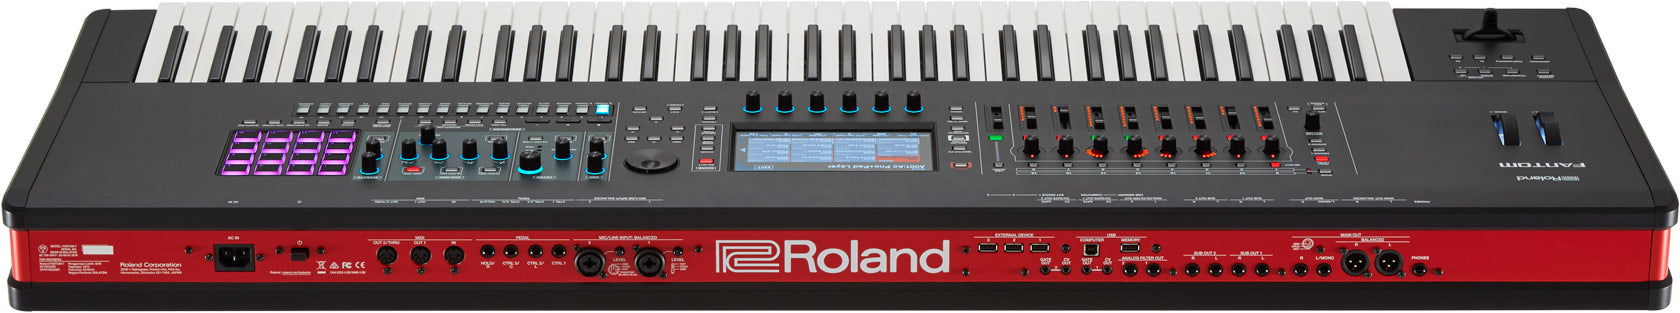 Roland FANTOM-7 Music Workstation Keyboard (Fantom 7 Fantom7), ROLAND, WORKSTATION, roland-workstation-fantom-7, ZOSO MUSIC SDN BHD